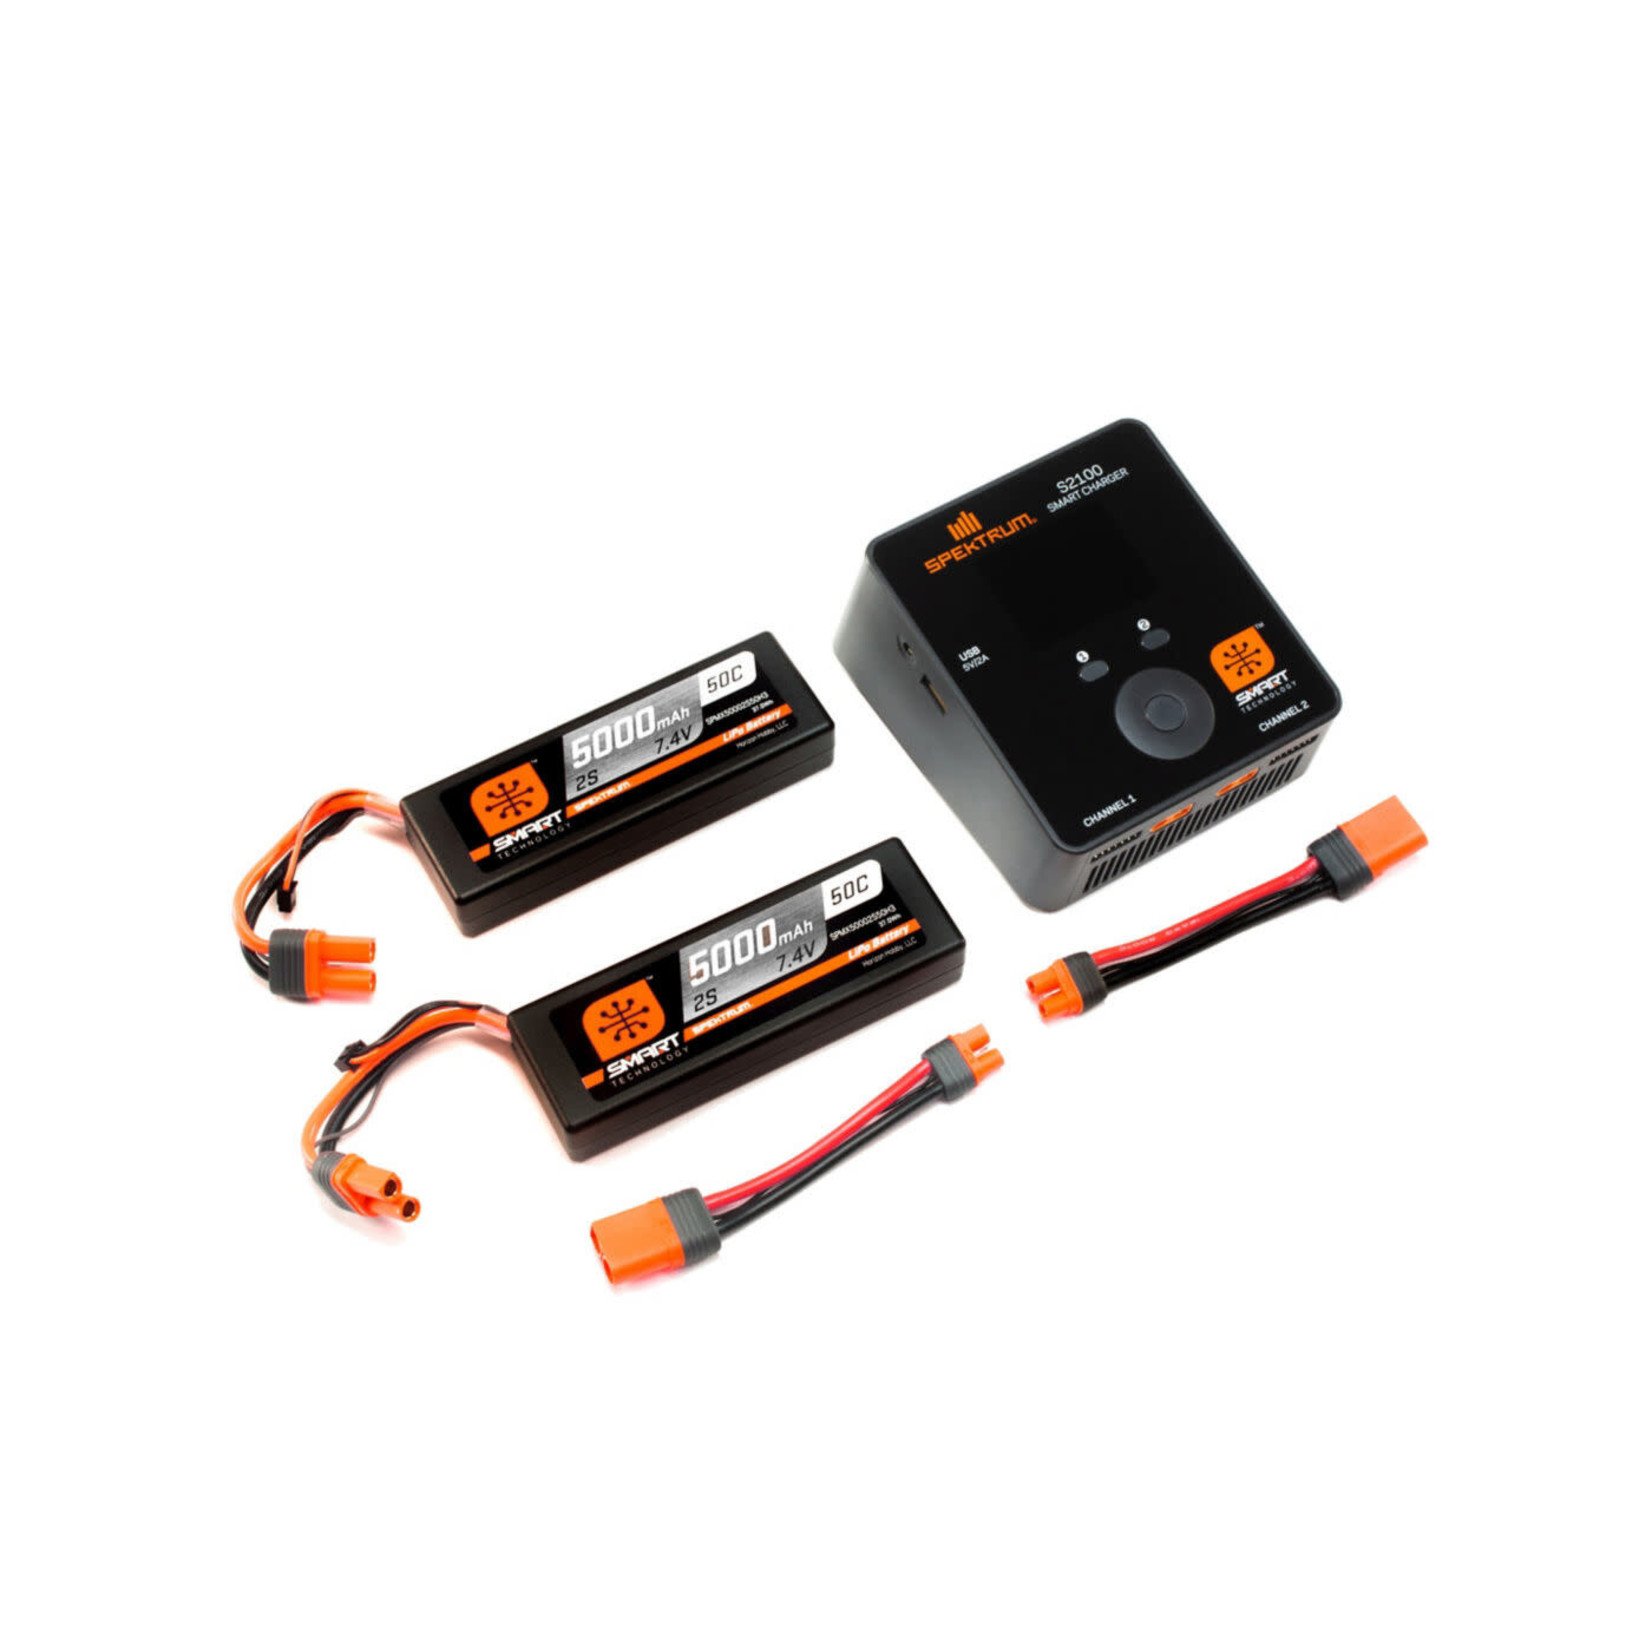 Spektrum Spektrum RC Smart PowerStage 4S Bundle w/Two 2S Smart LiPo Hard Case Batteries (5000mAh) #SPMXPS4